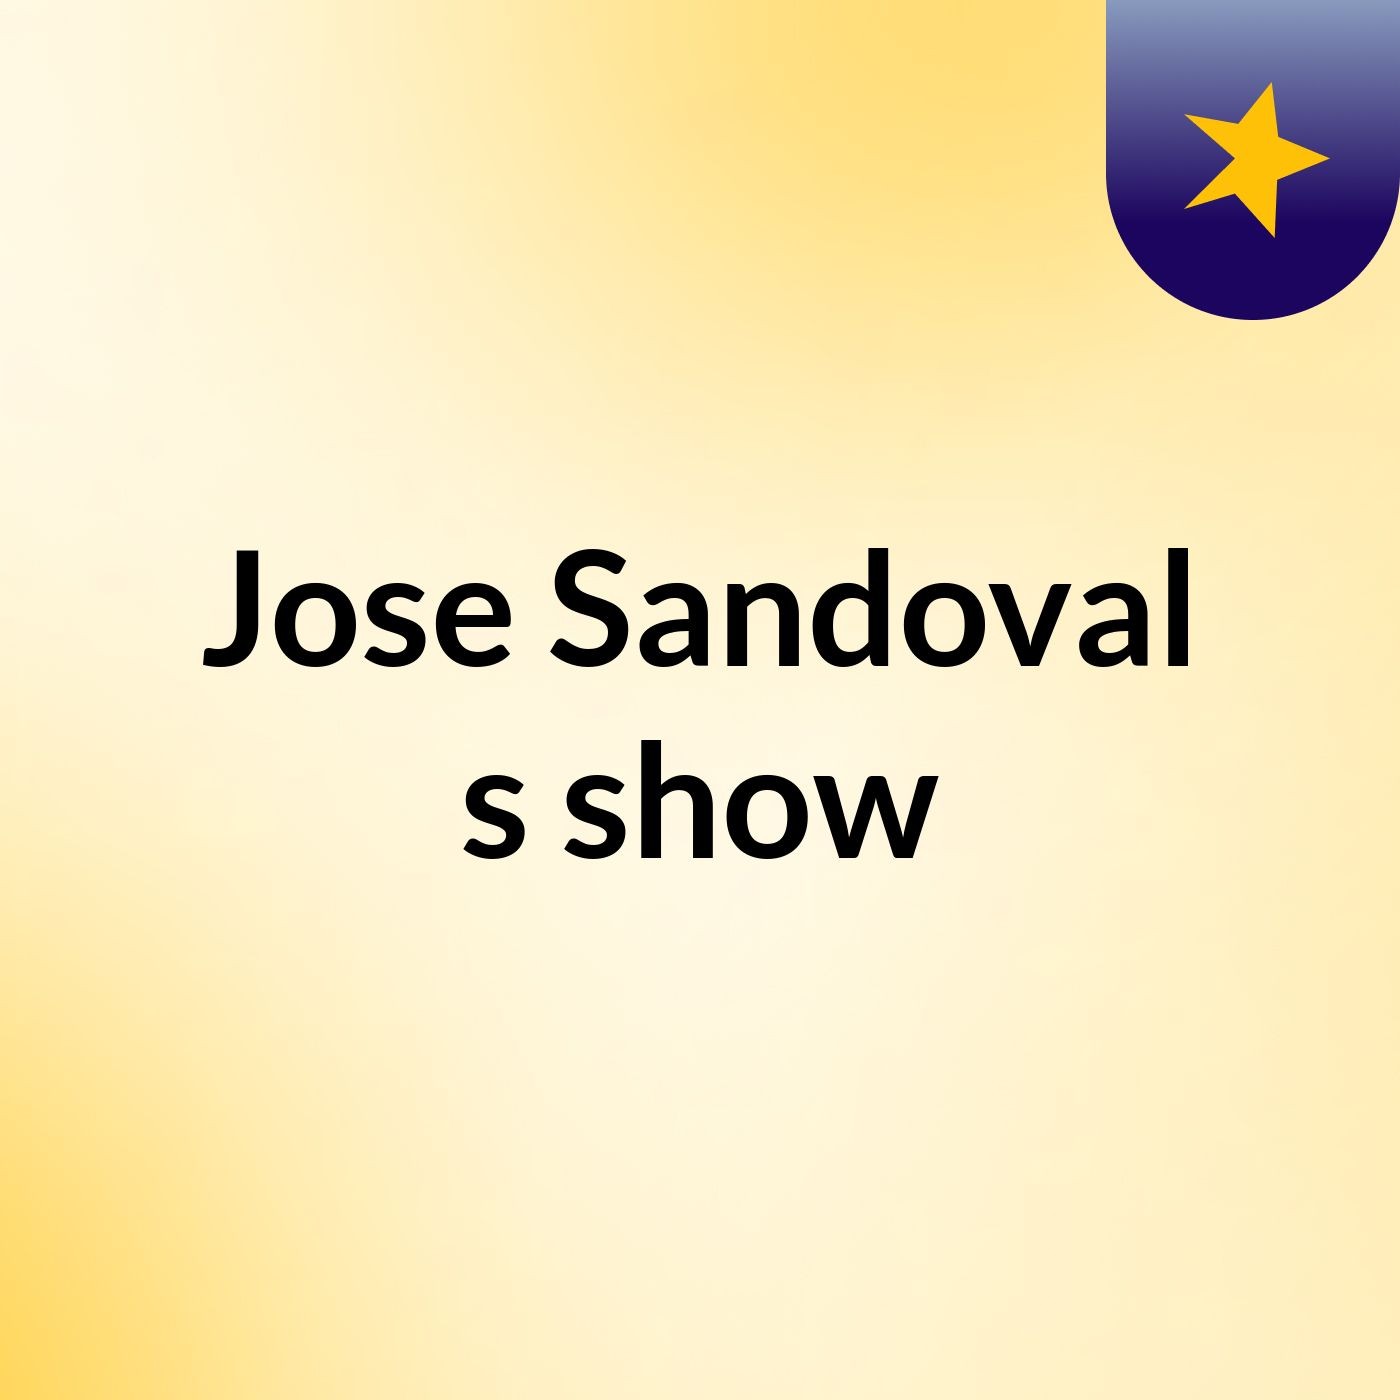 Jose Sandoval's show